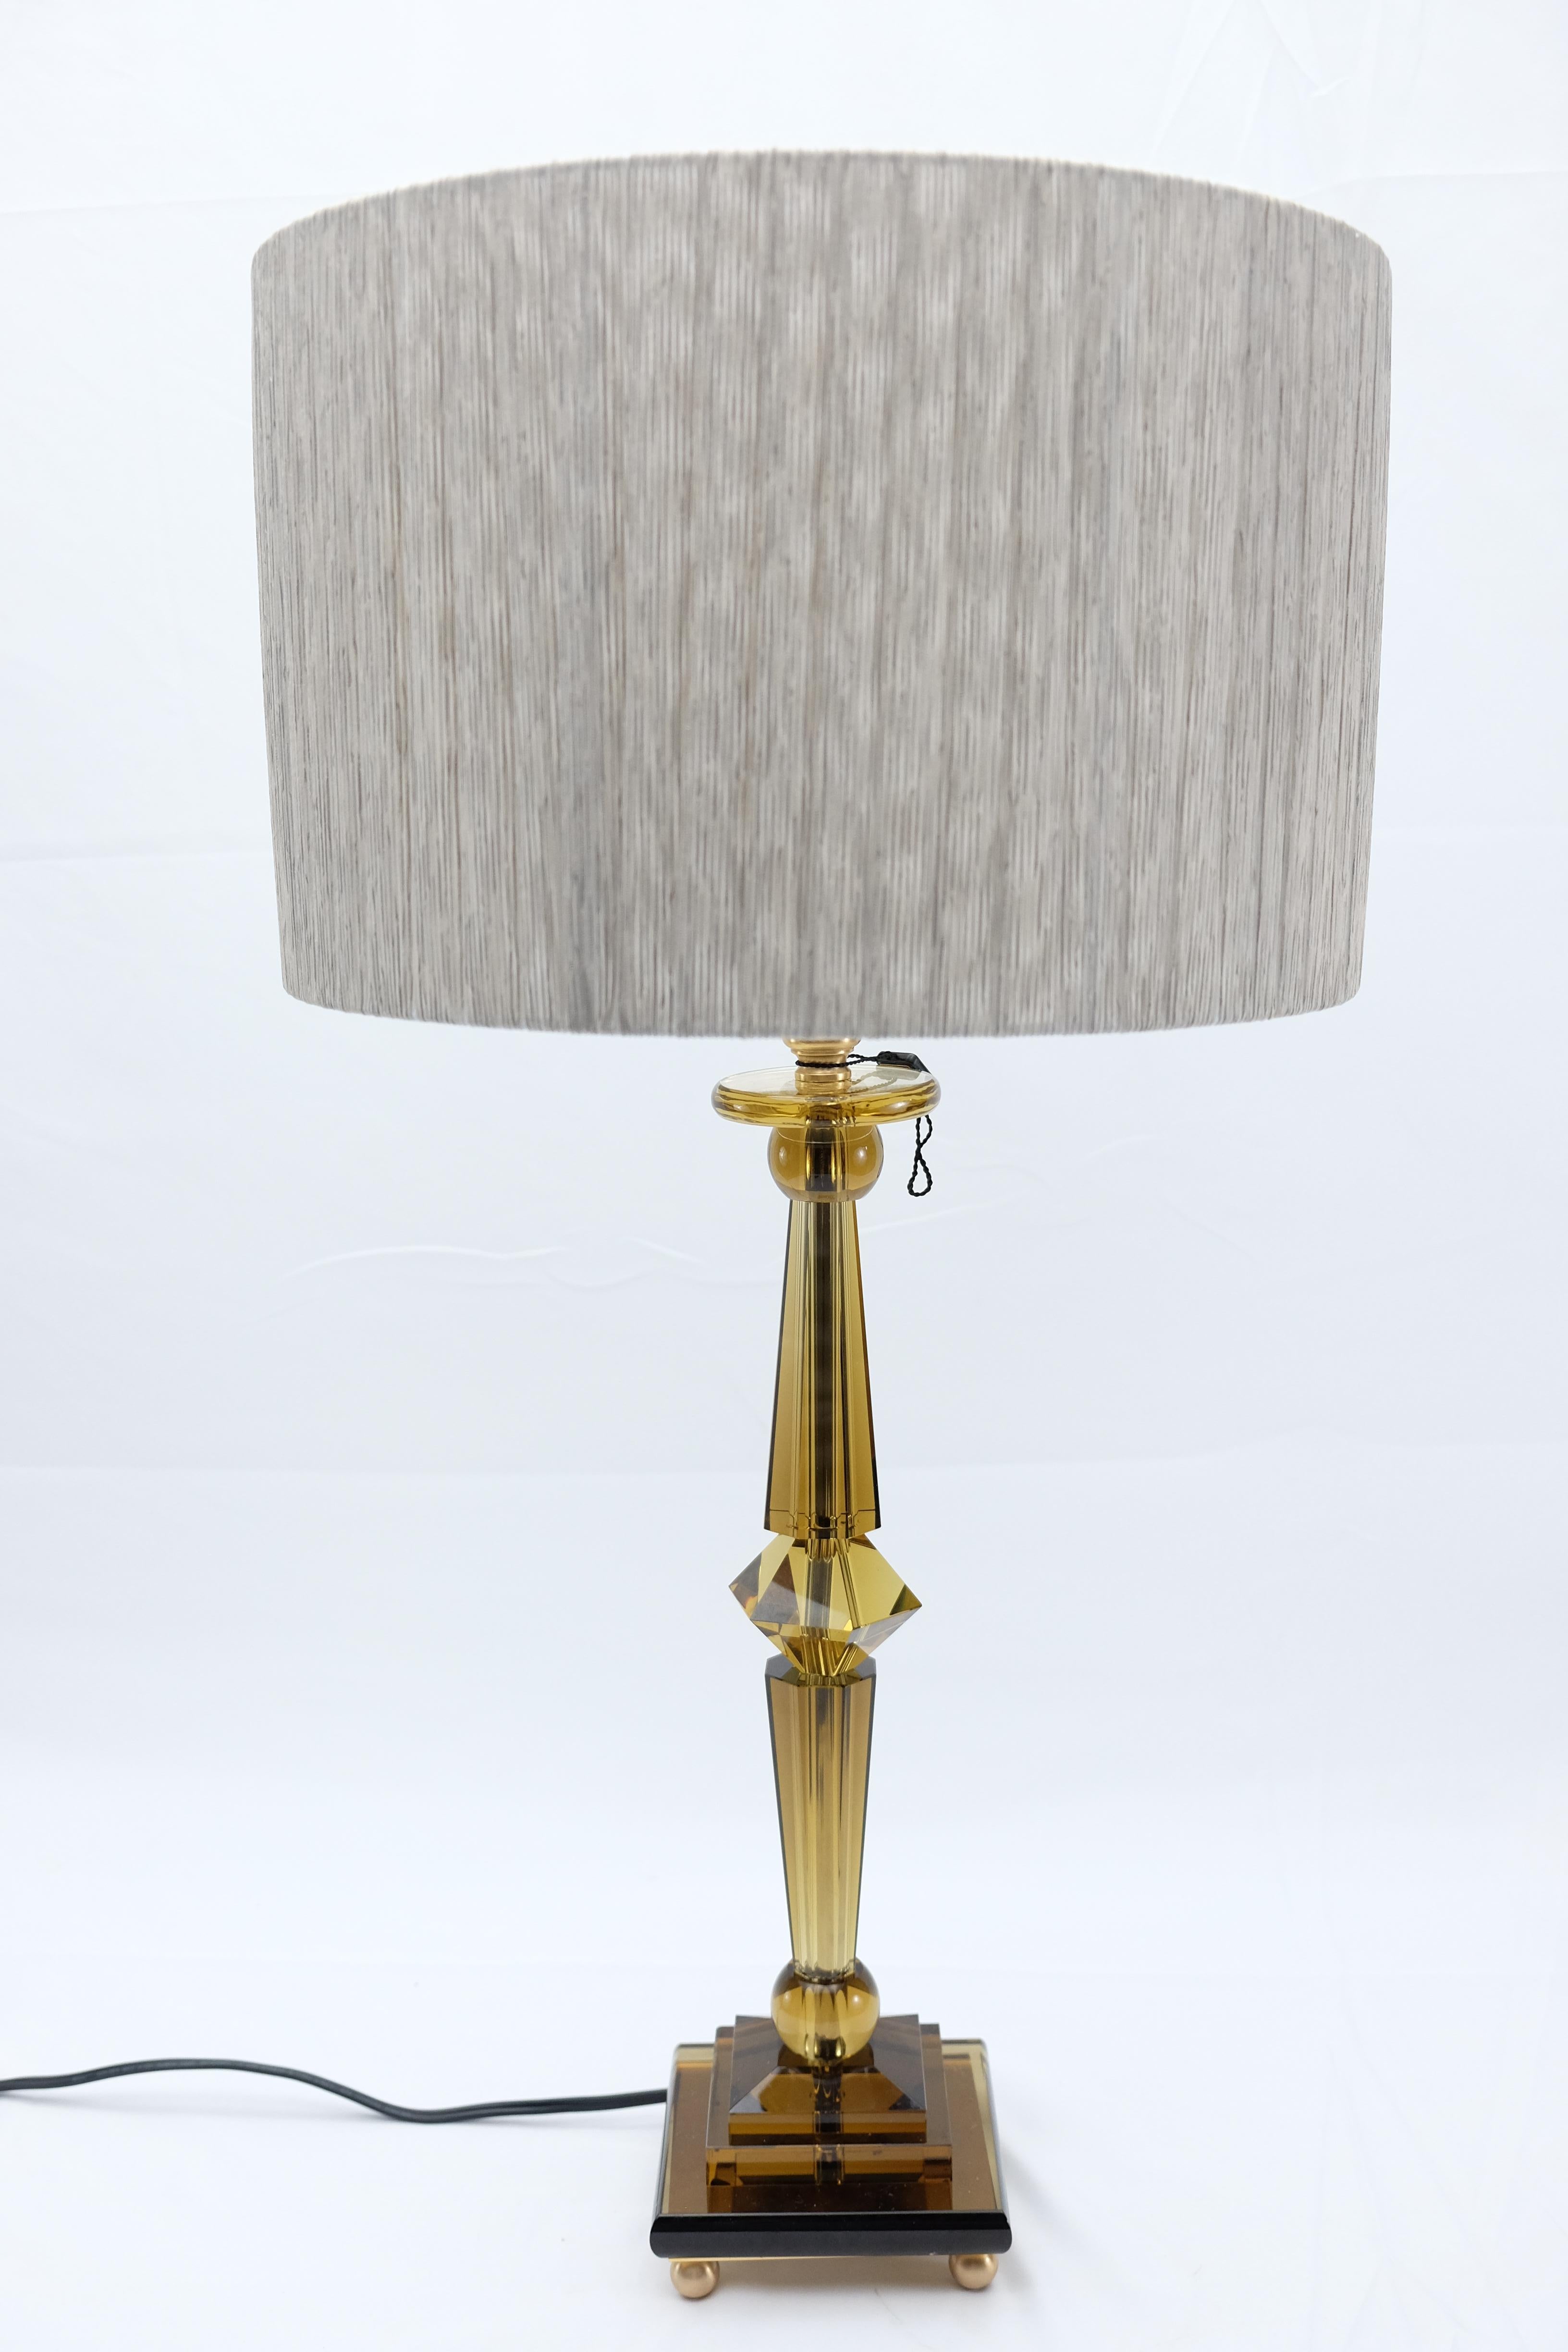 Italian Attilio Amato for Laudarte Srl Prisma Big Table Lamp, Pair Available For Sale